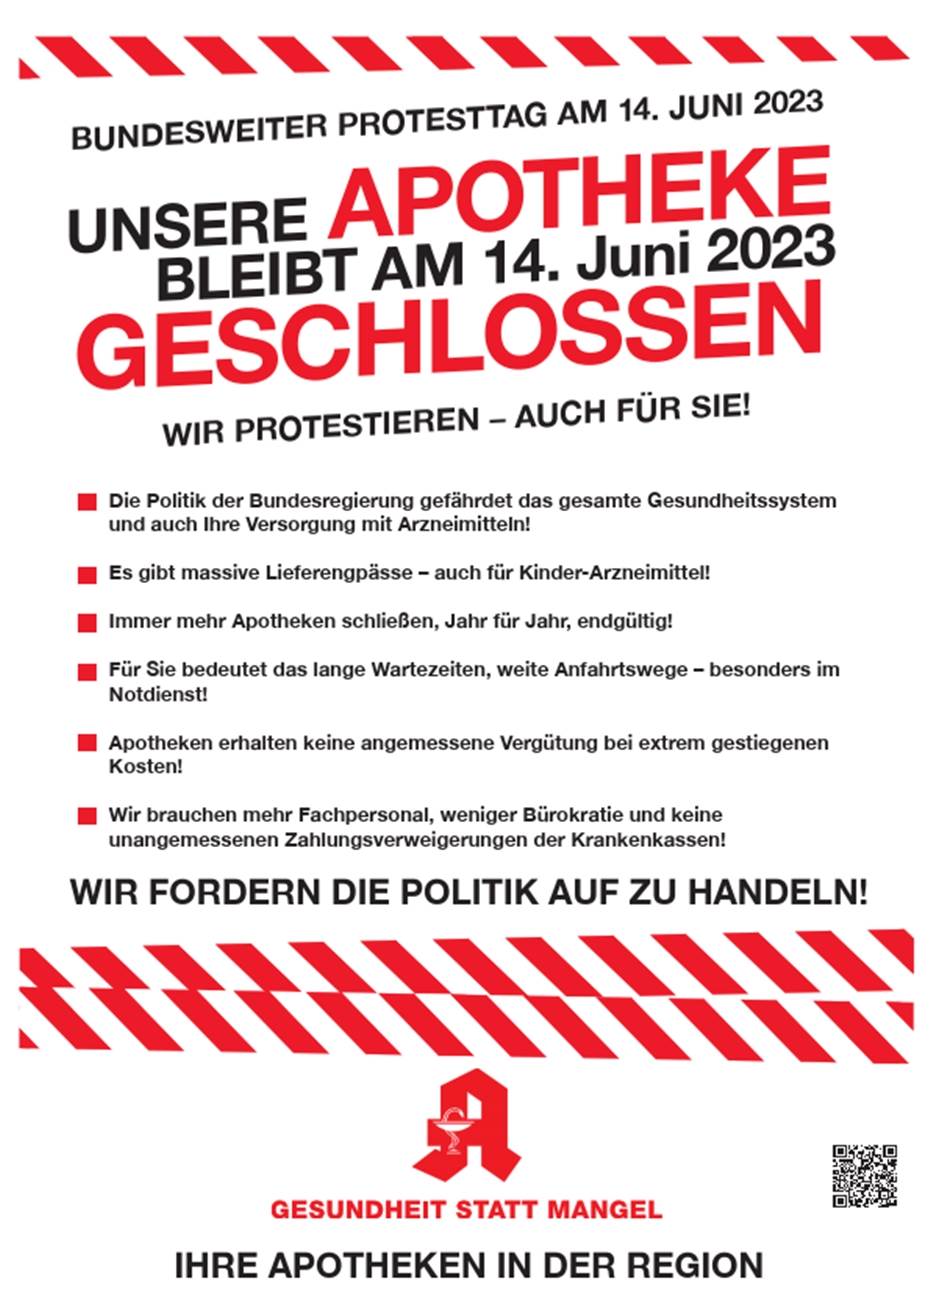 Bundesweiter Protesttag: Apotheken bleiben geschlossen